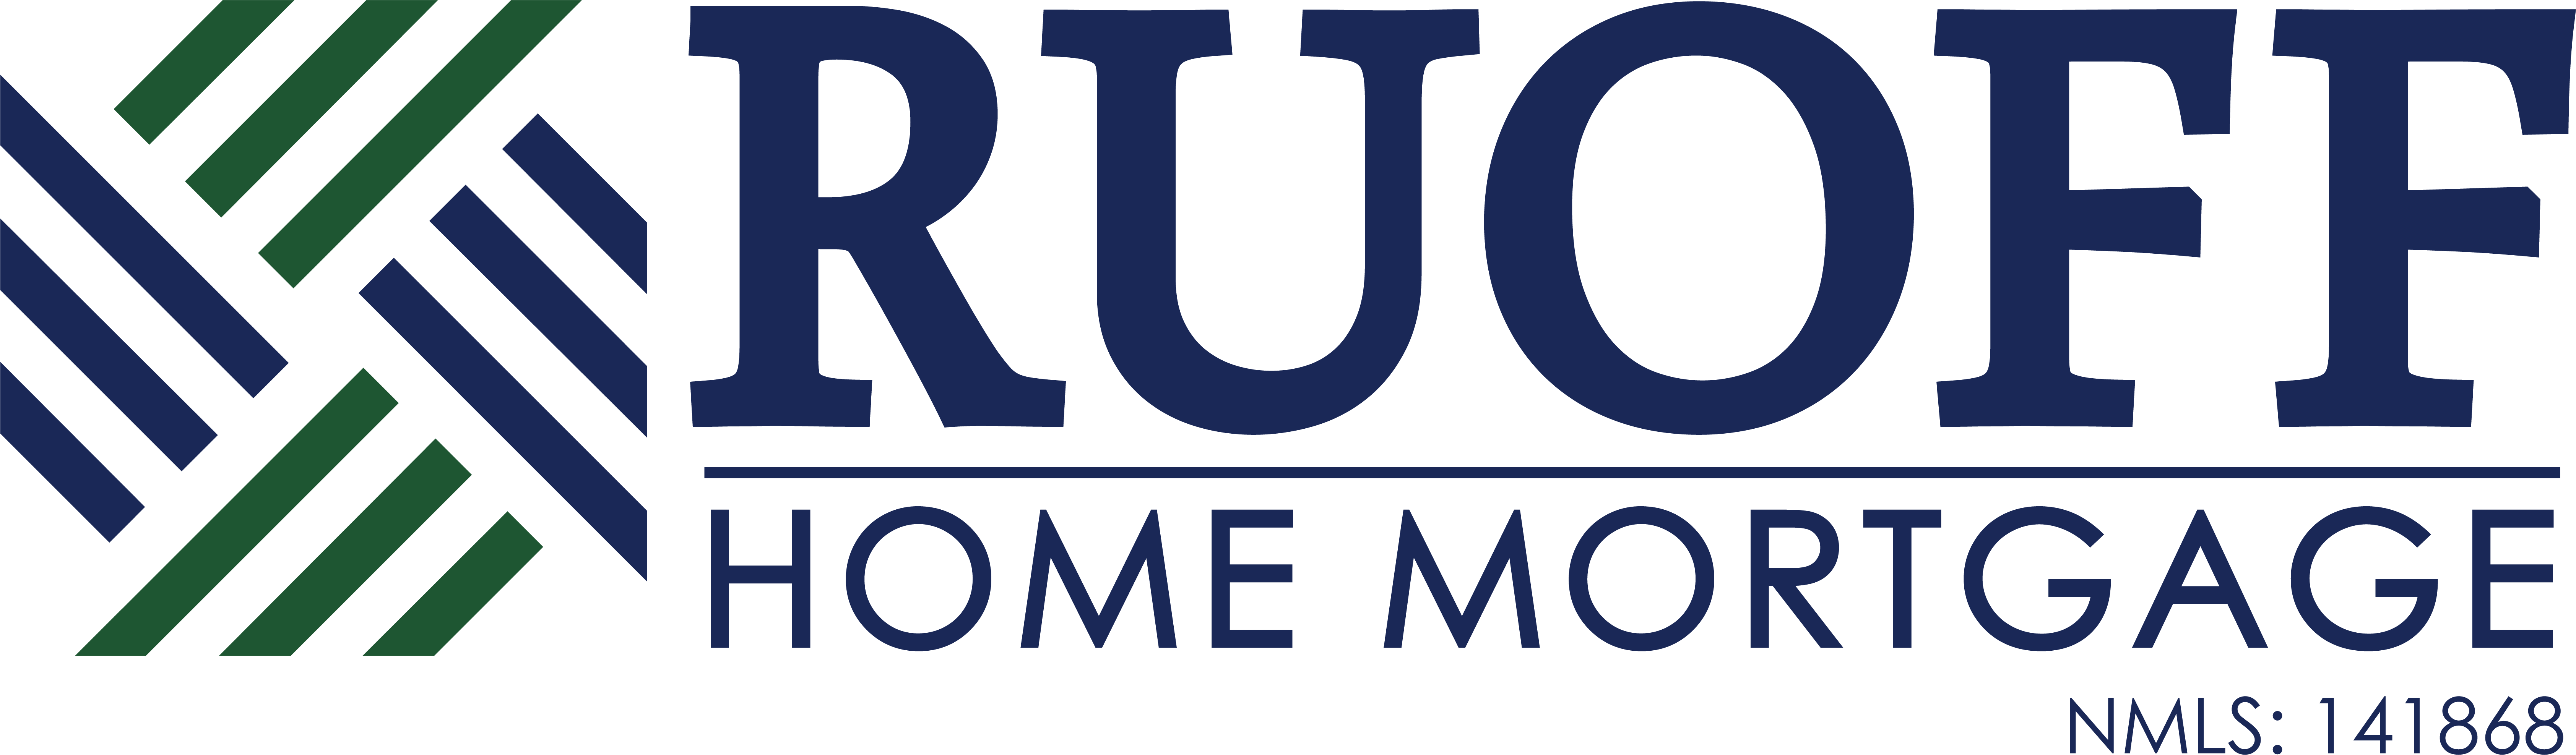 NMLS Logo - Ruoff Home Mortgage - Home Lending